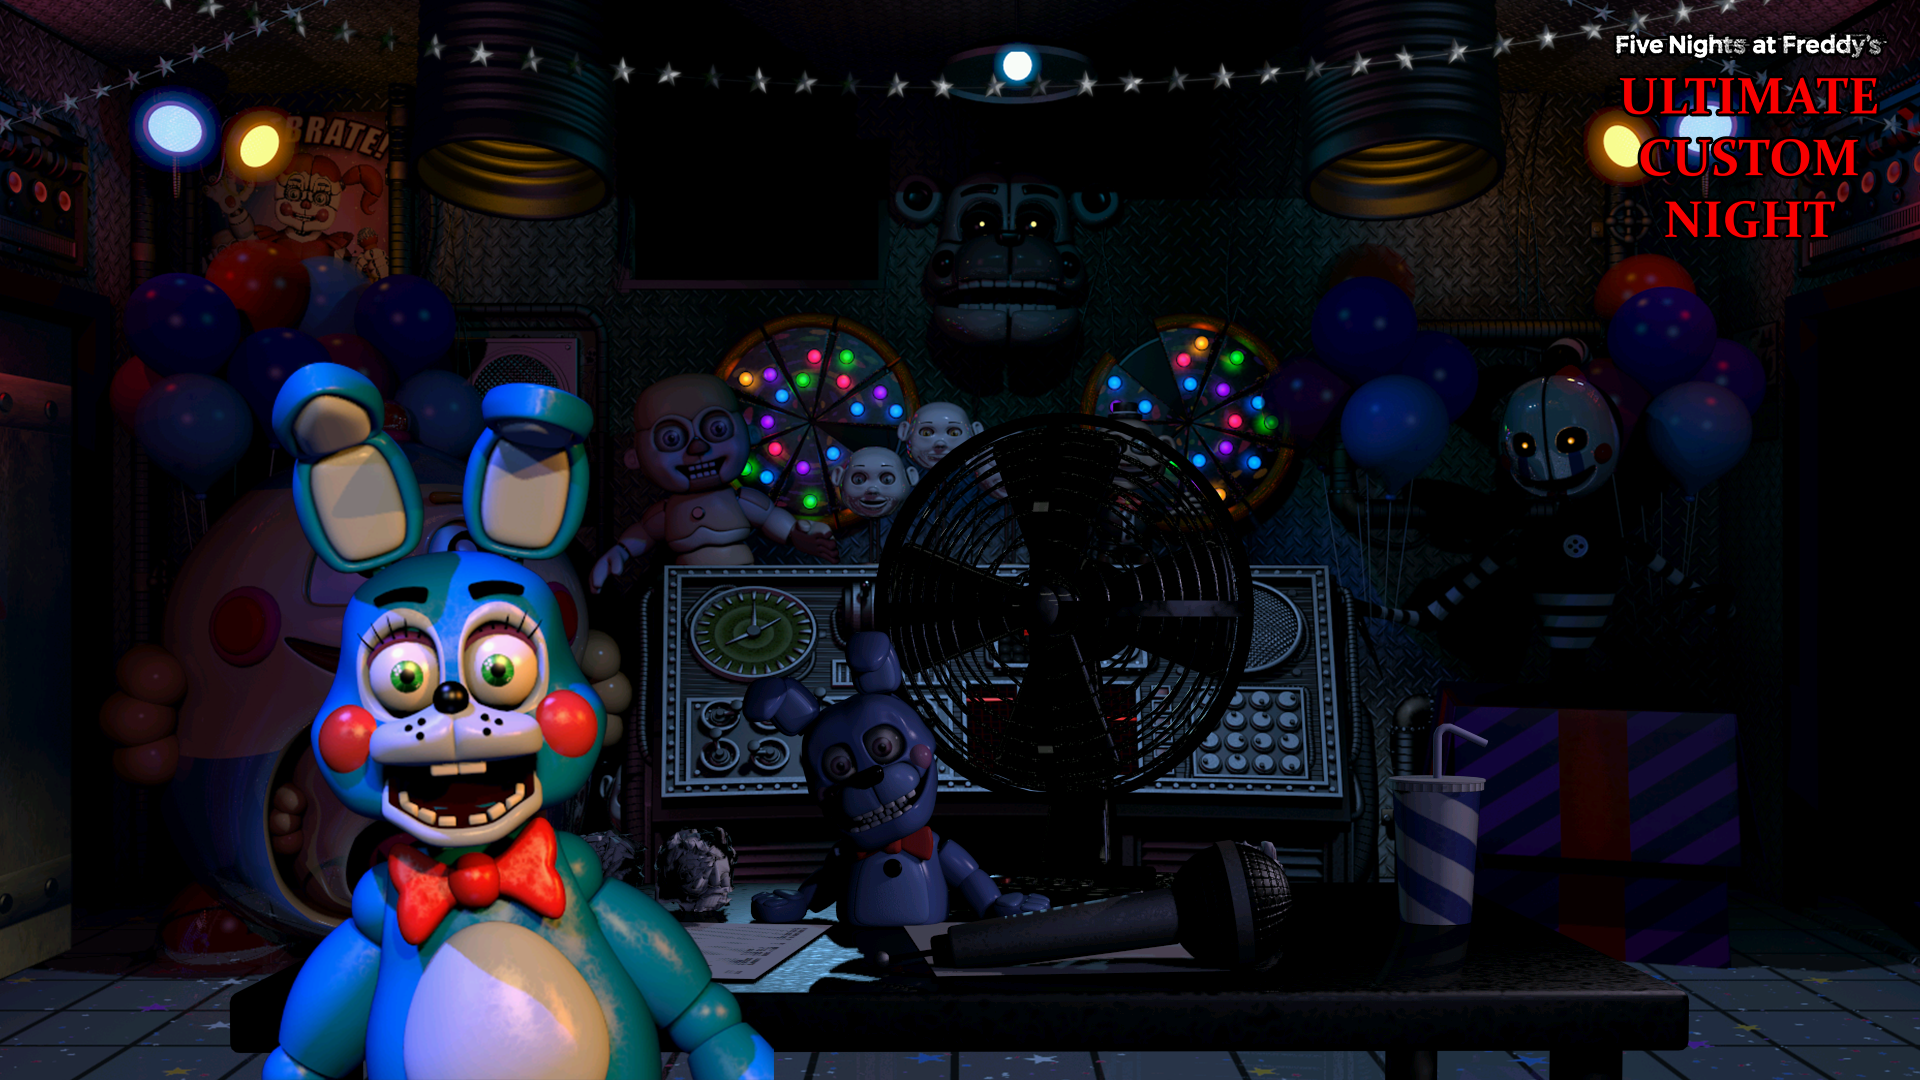 HD wallpaper: Video Game, Five Nights at Freddy's: Ultimate Custom